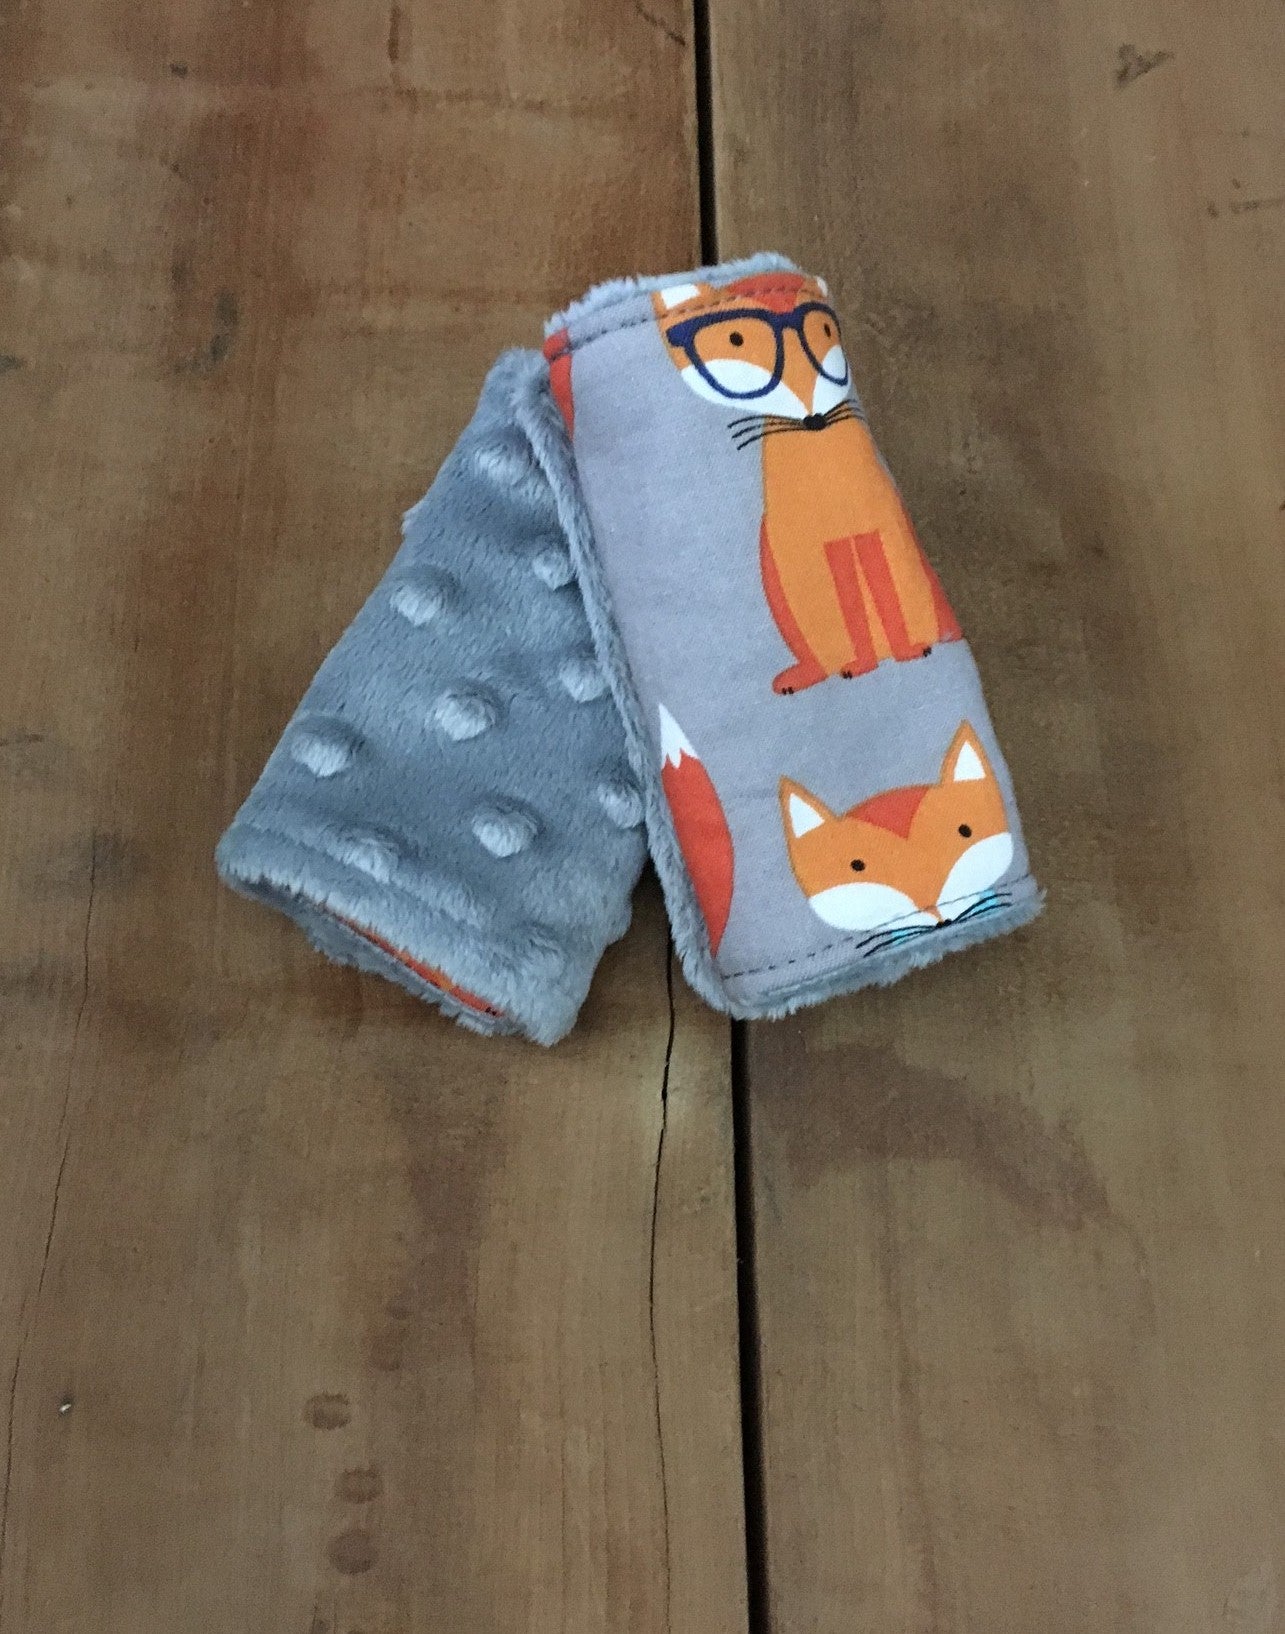 orange nerdy fox car seat strap covers shown in size 4" shown in gray minky